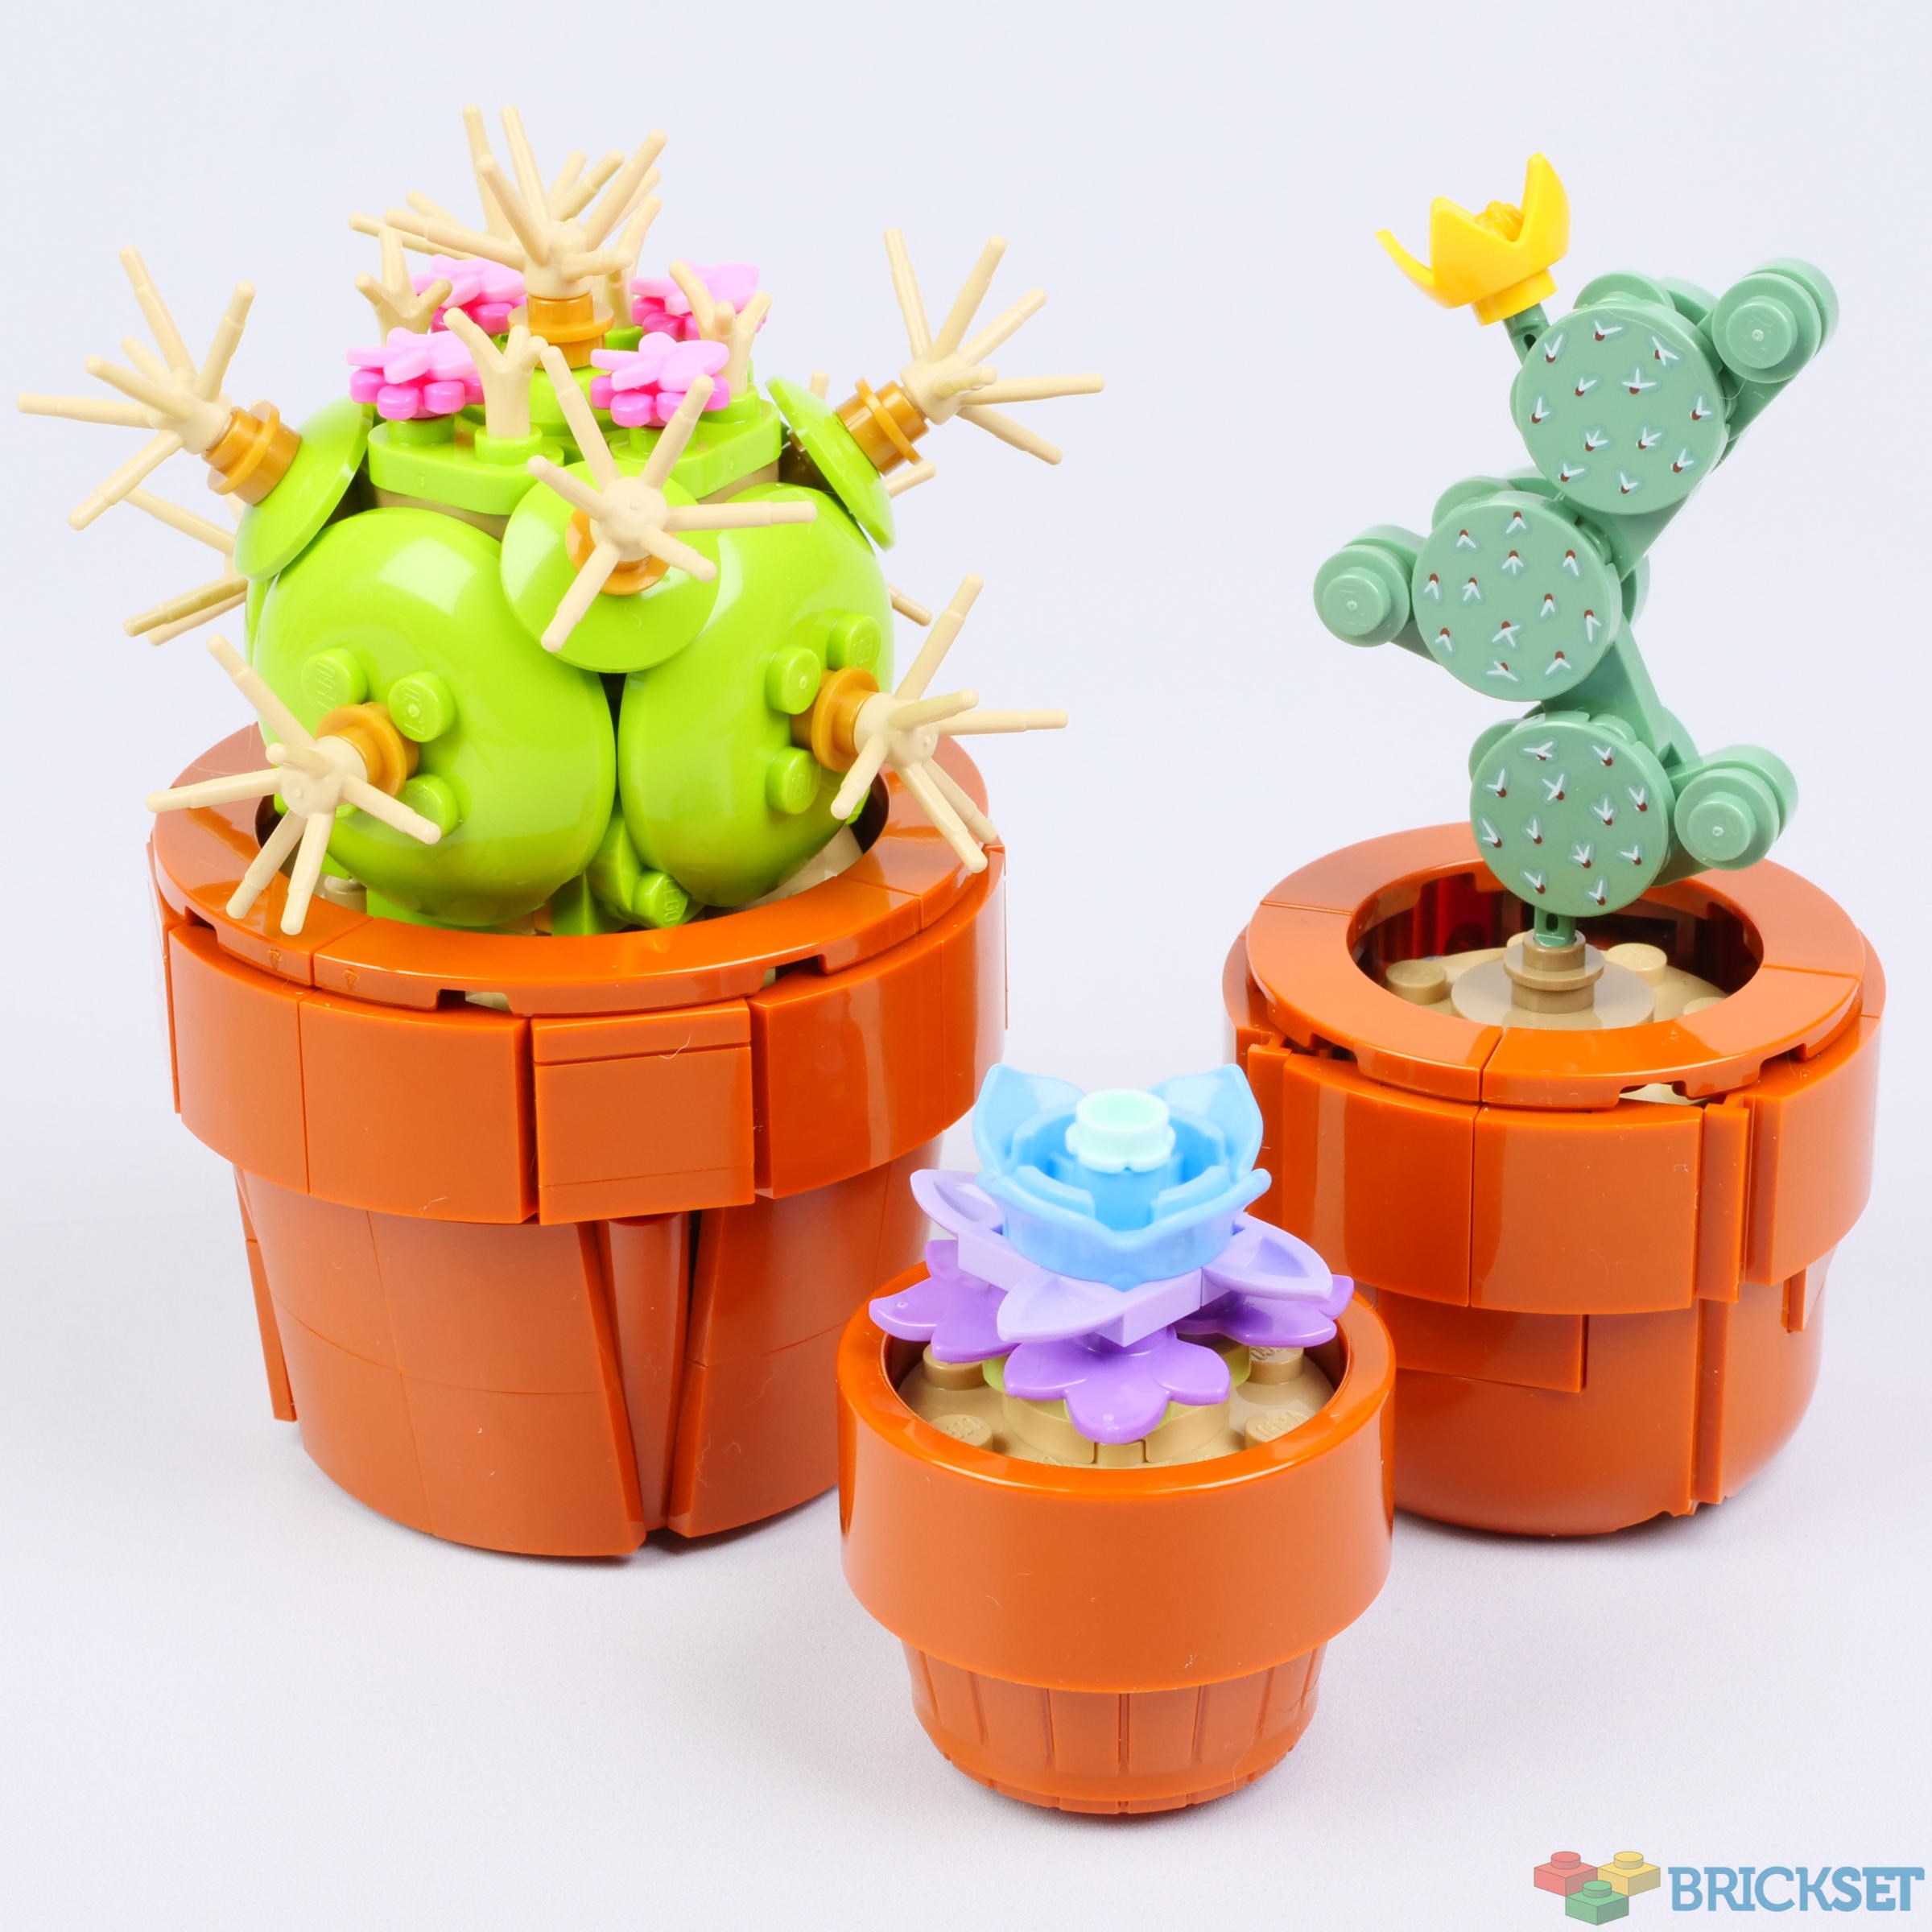 LEGO 10329 Tiny Plants review | Brickset